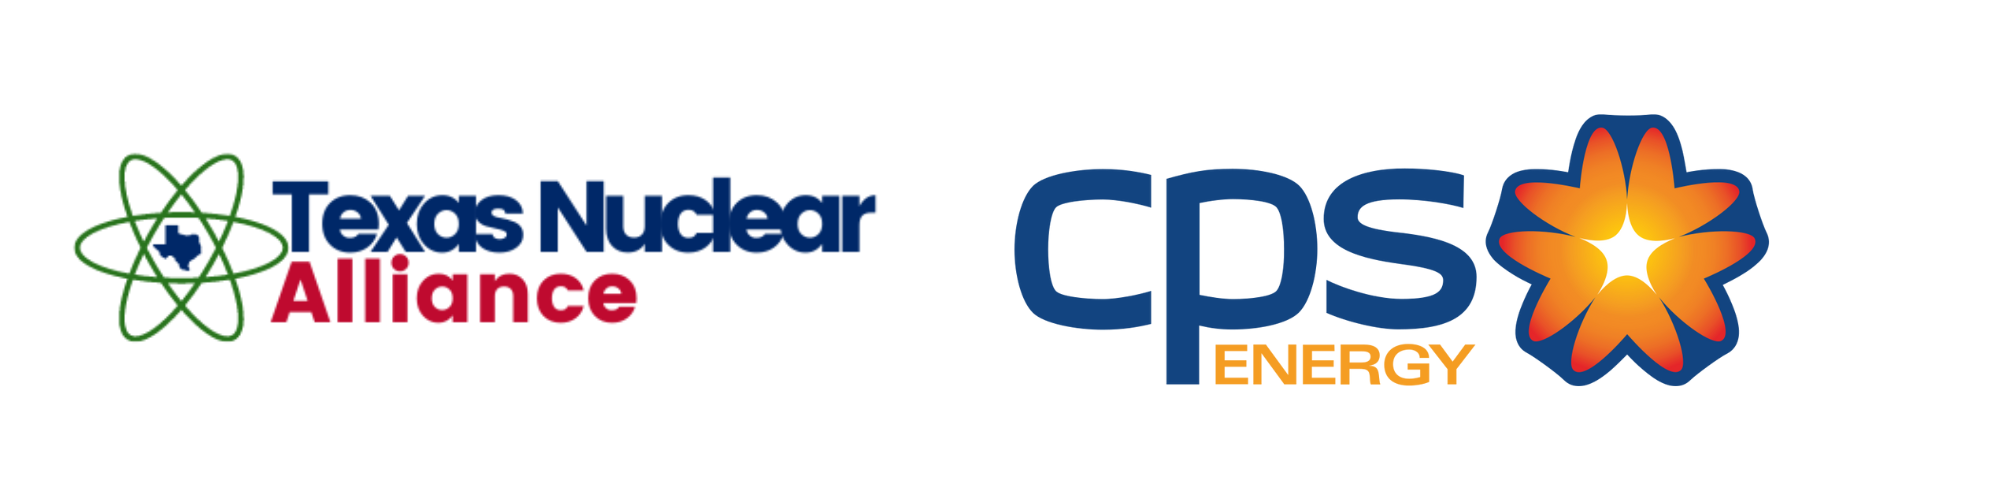 CPS Energy Joins Texas Nuclear Alliance